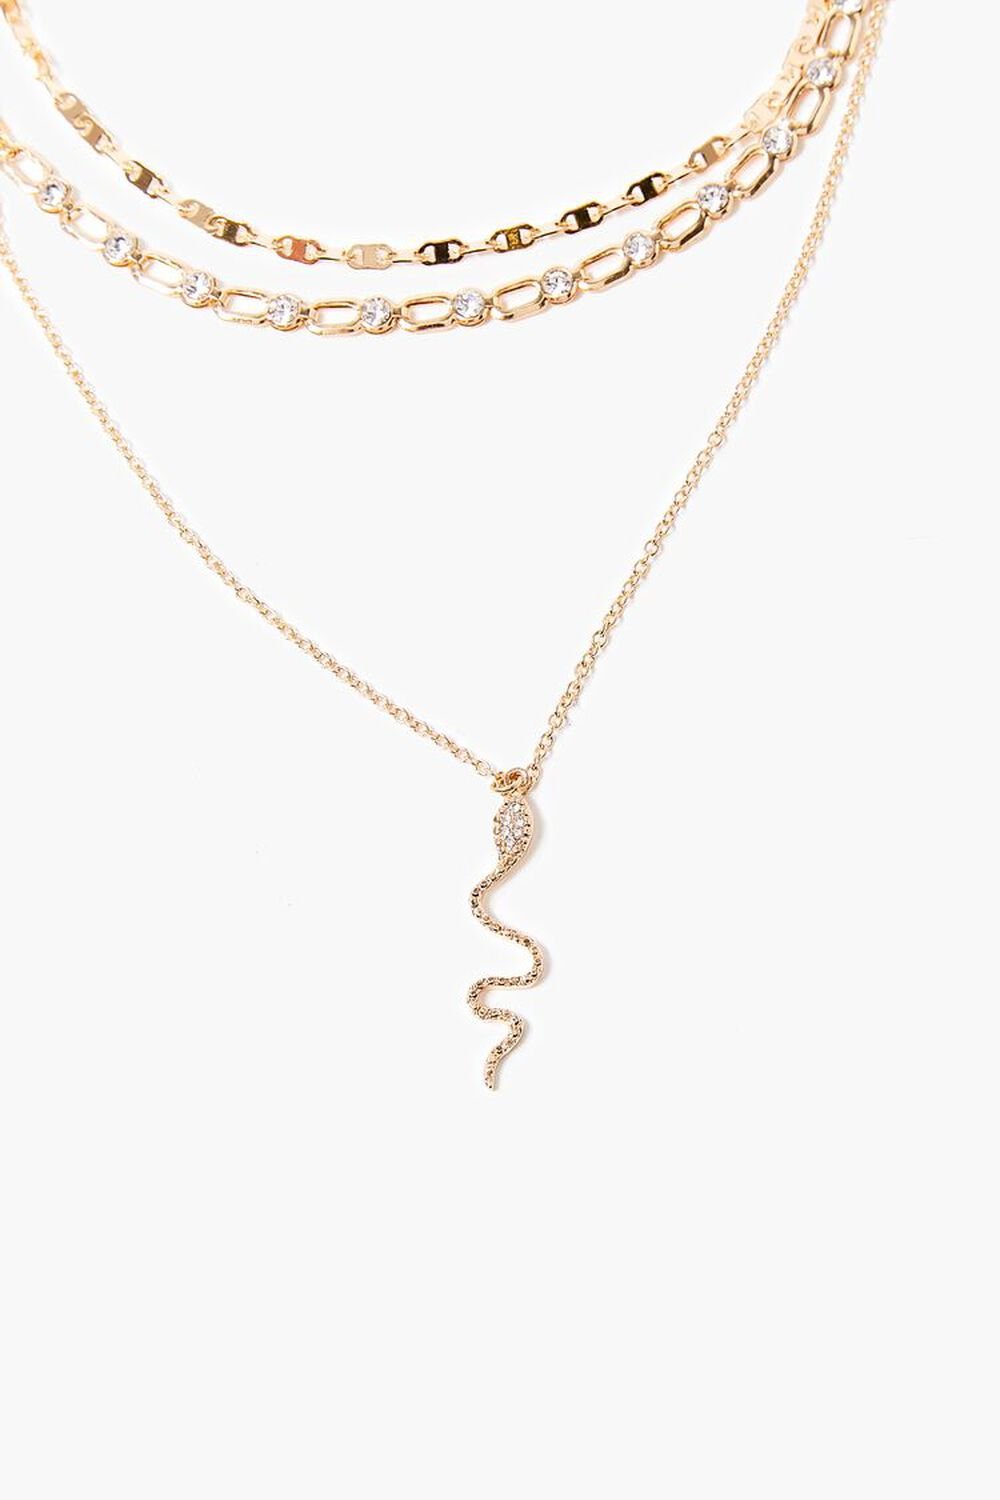 GOLD Snake Pendant Layered Necklace, image 1